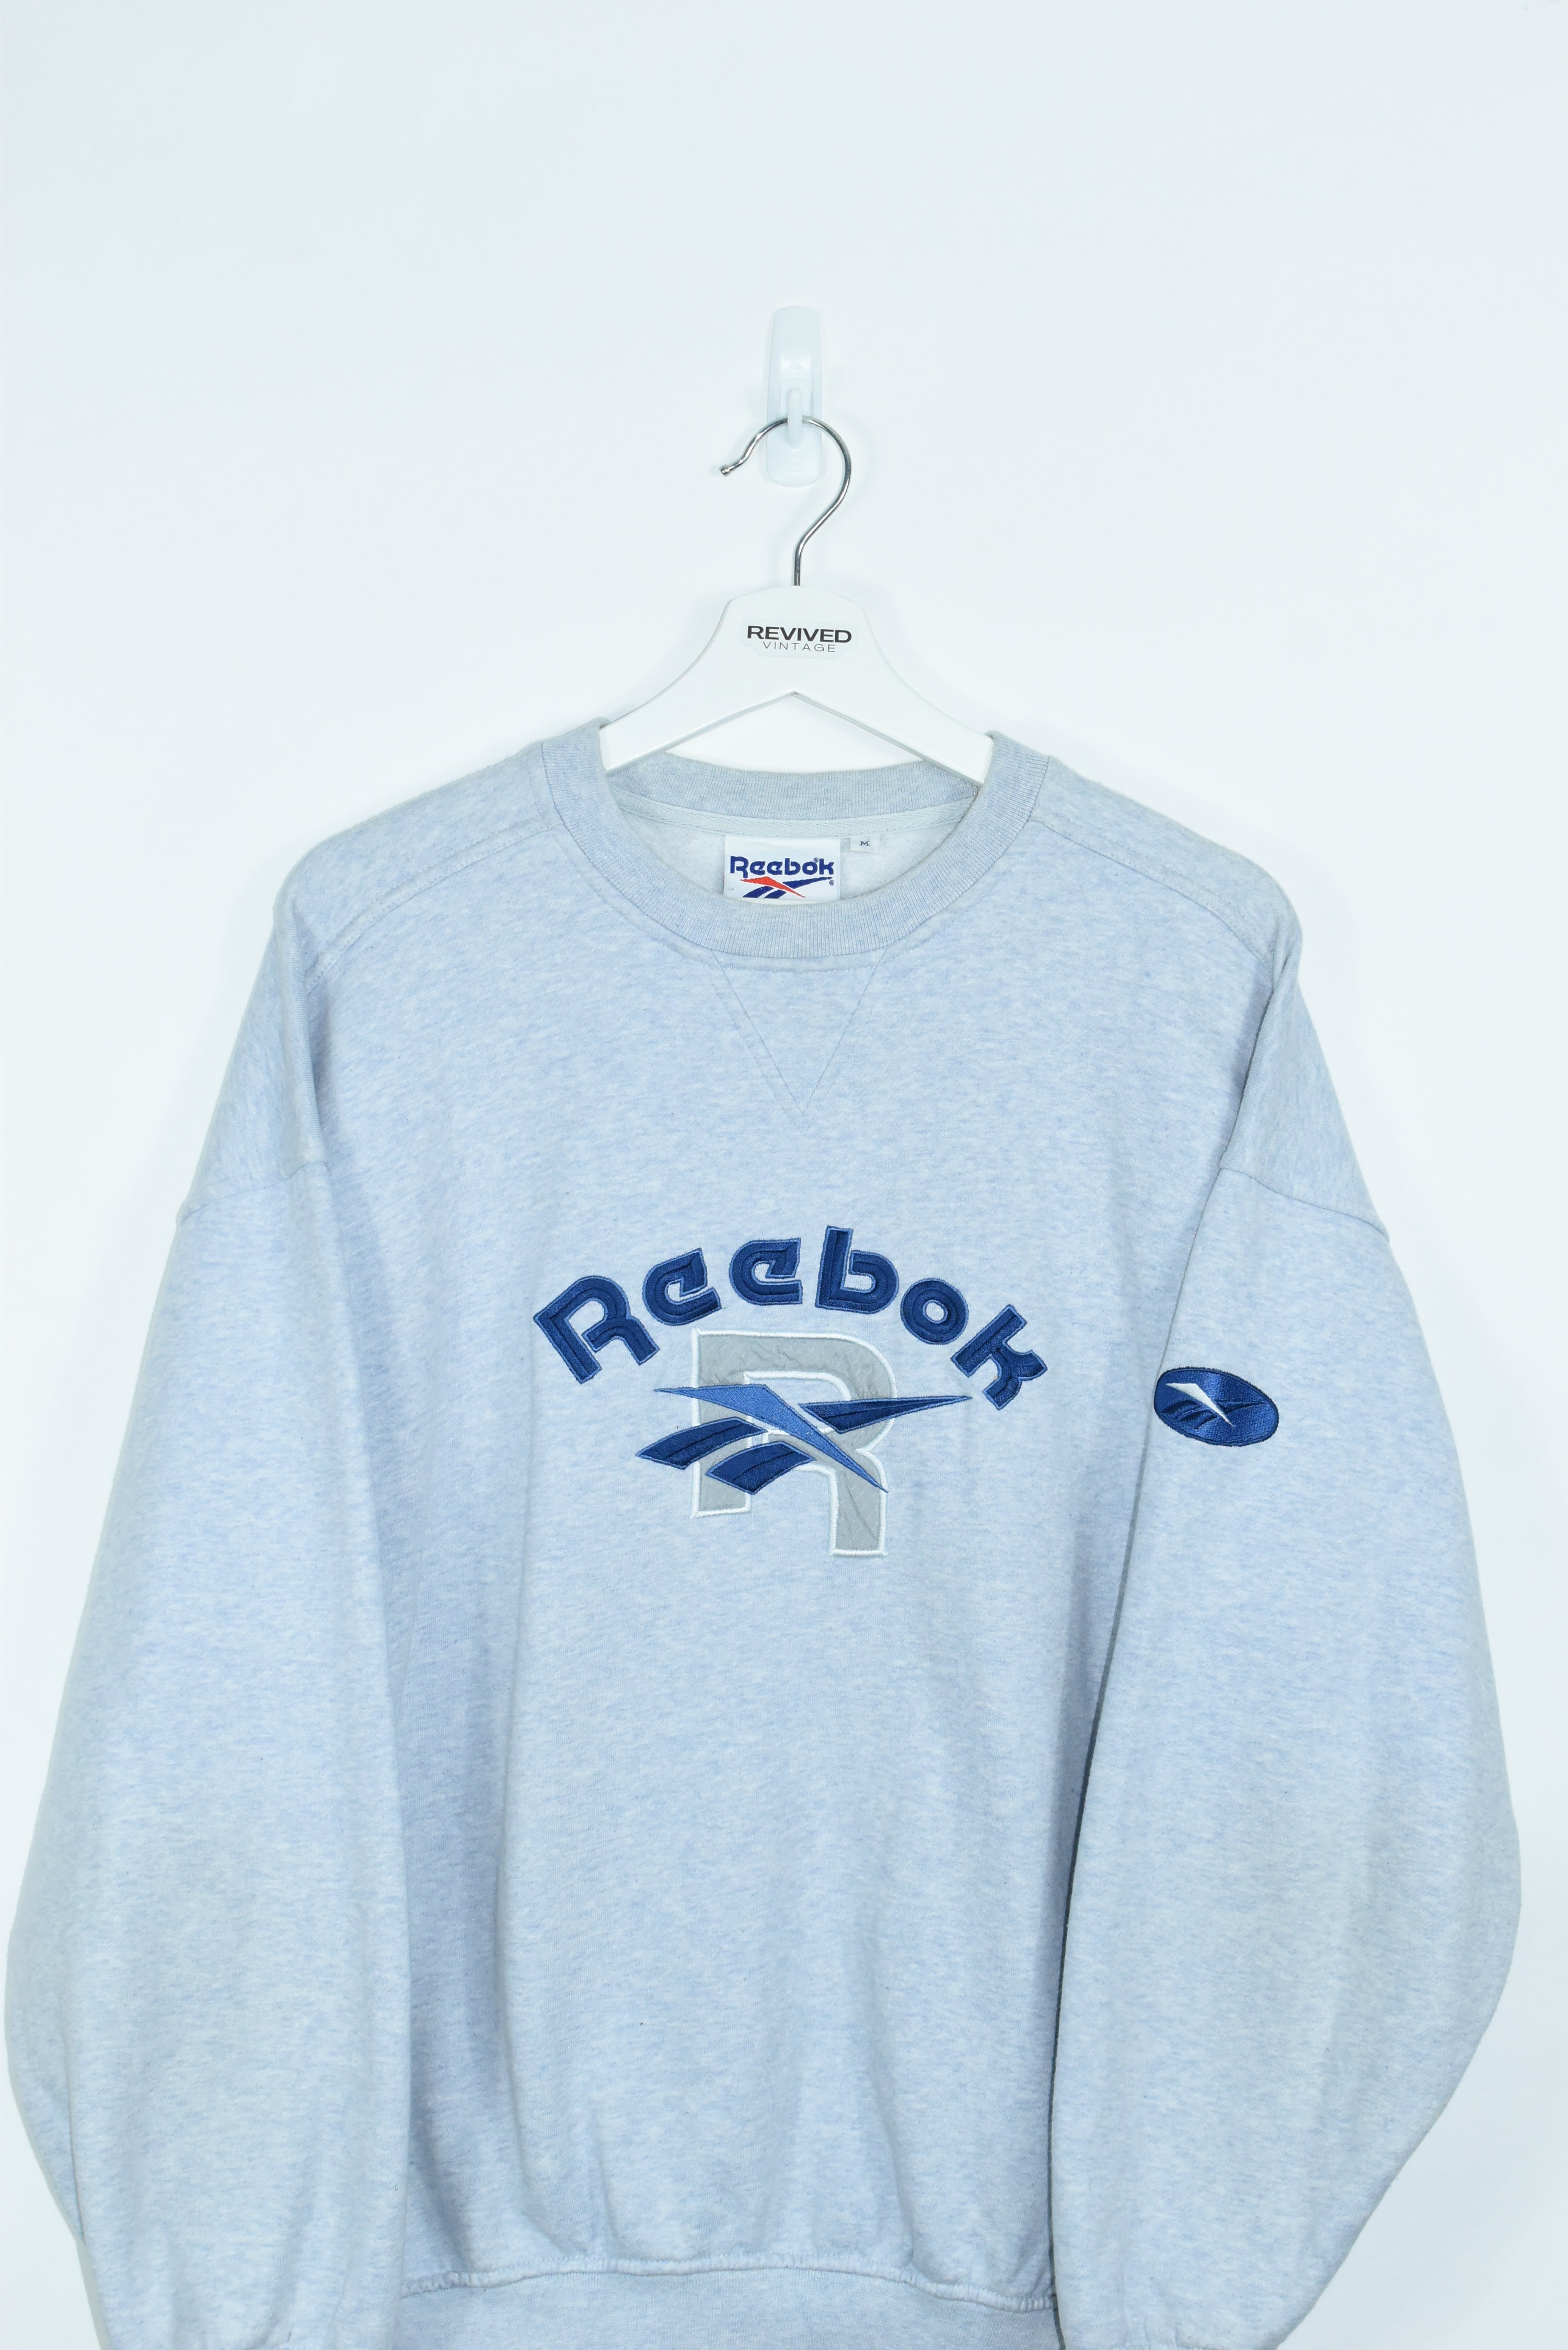 Vintage Reebok Embroidery Logo Sweatshirt LARGE (Baggy)